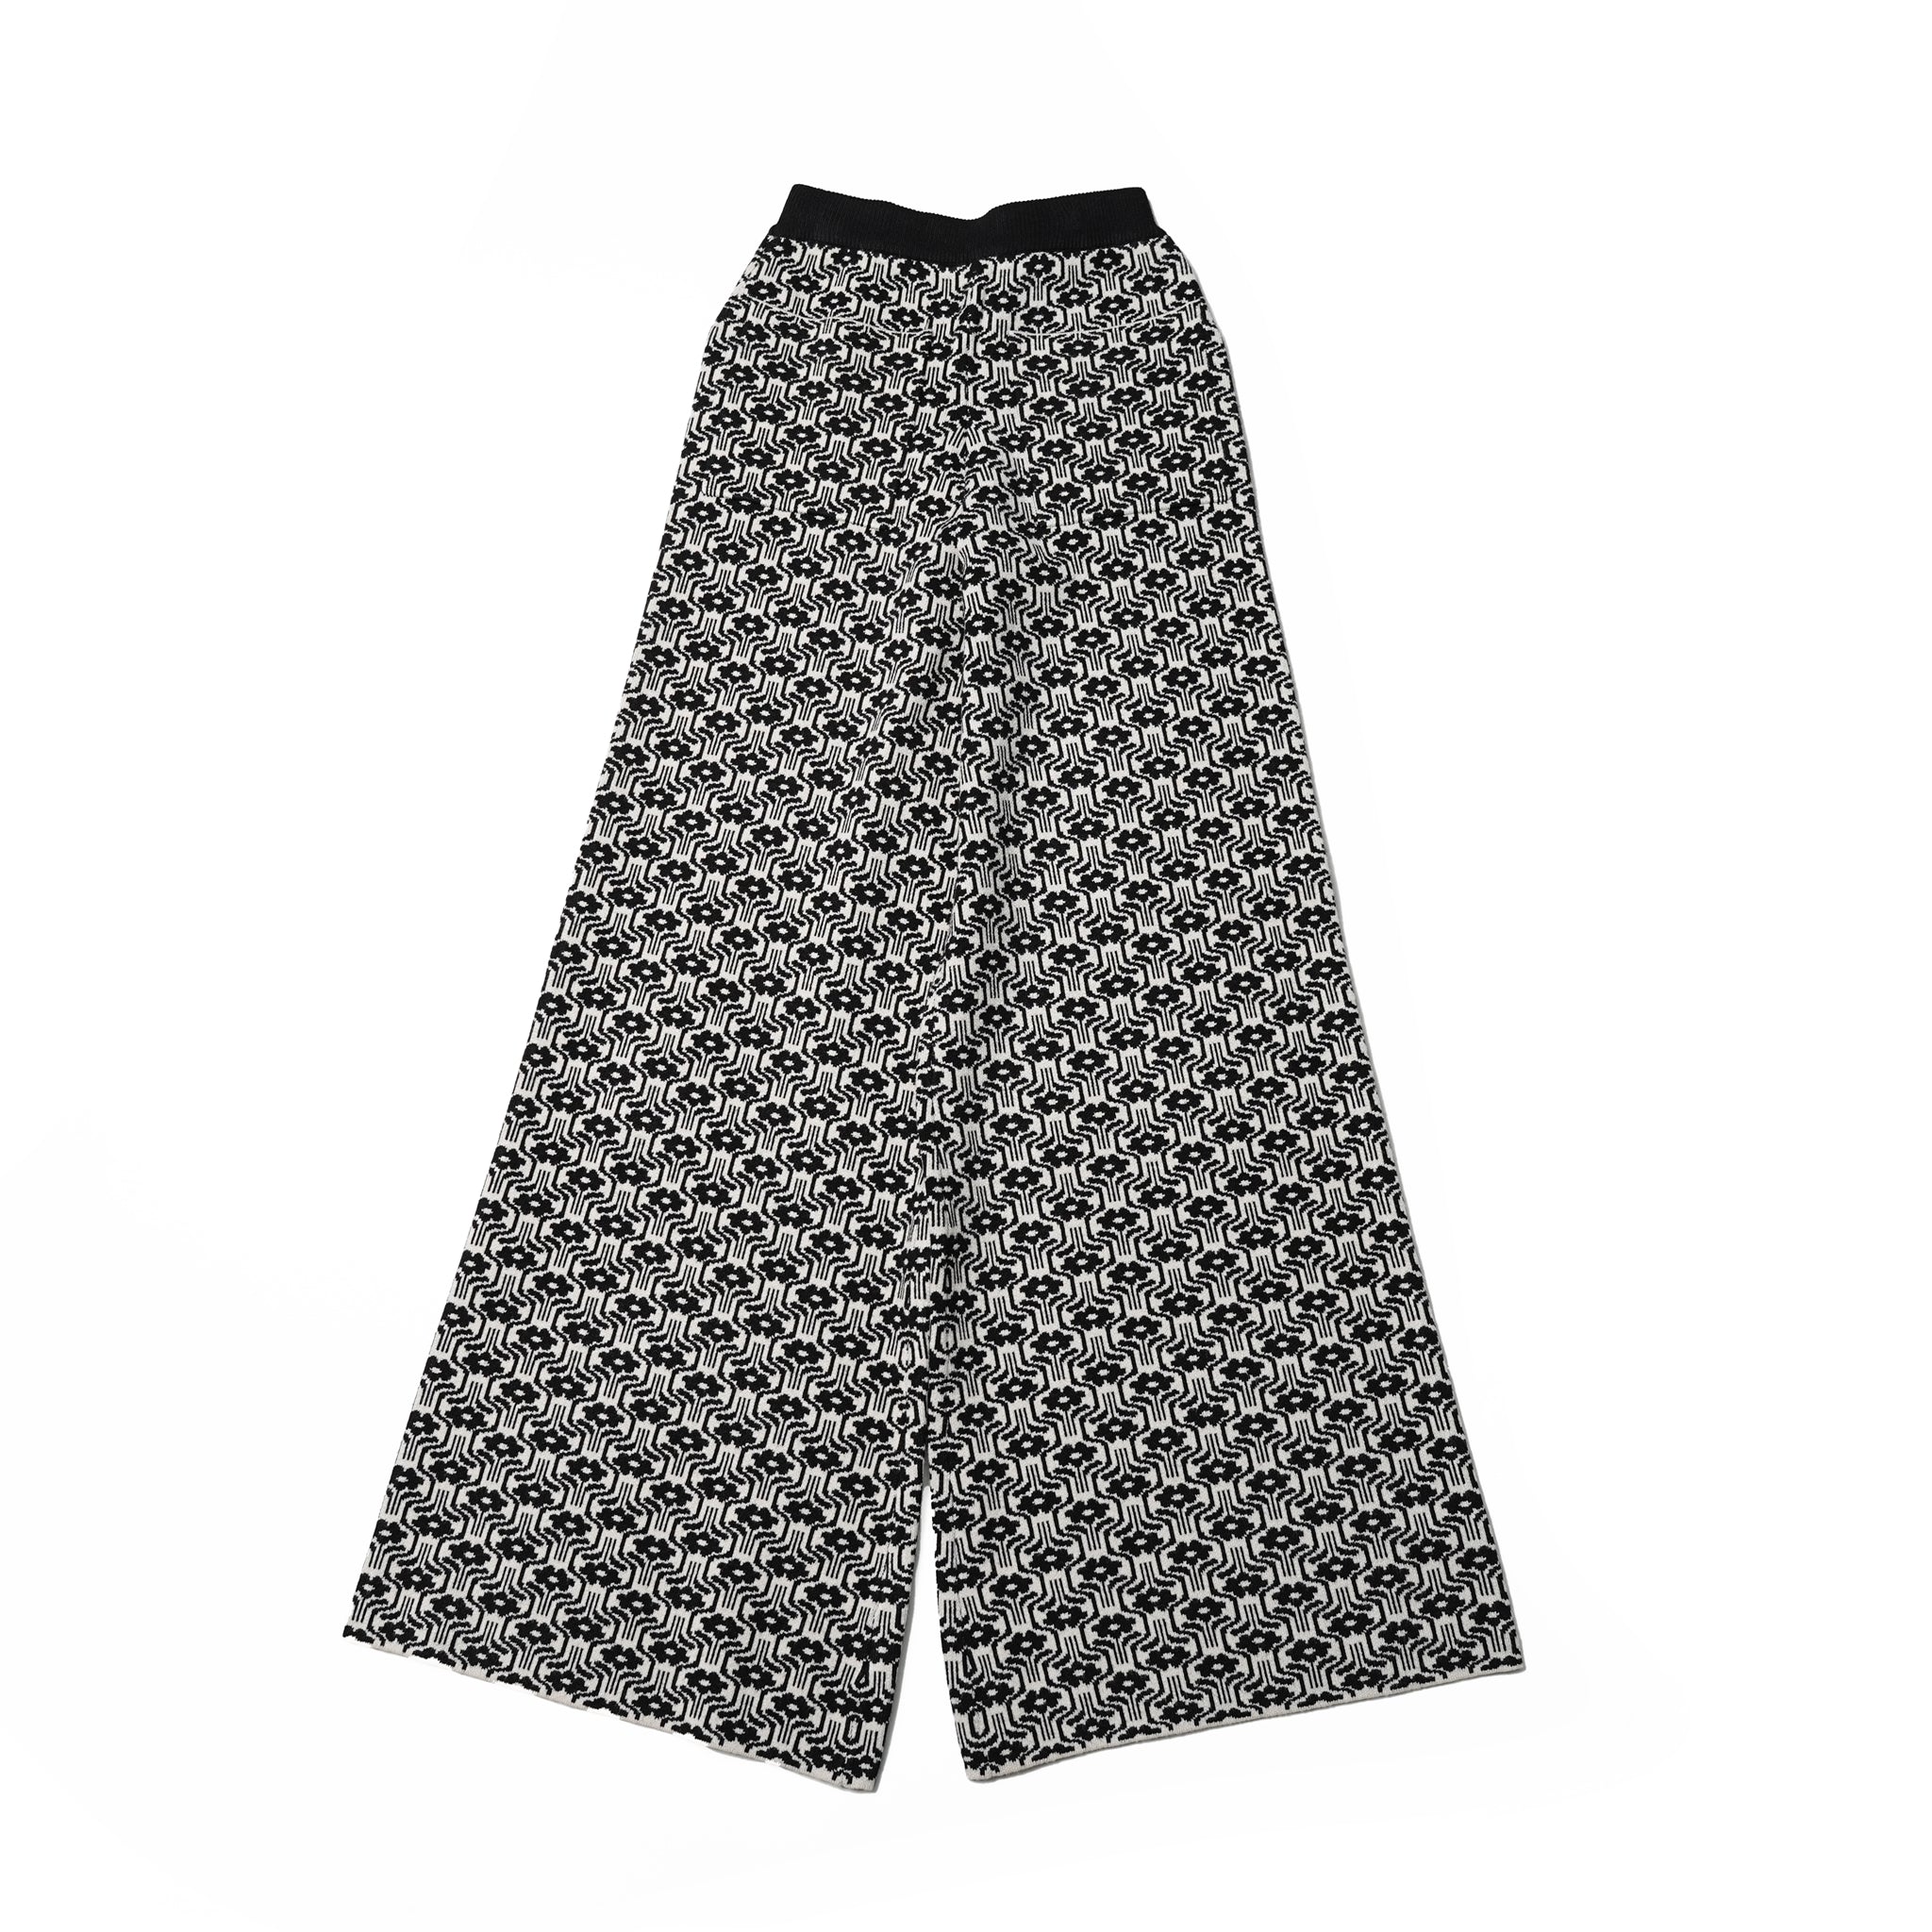 Name:Jacquard Knit Baggy Pants | Color:Geometry【AMBERGLEAM_アンバーグリーム】| No:11481311128